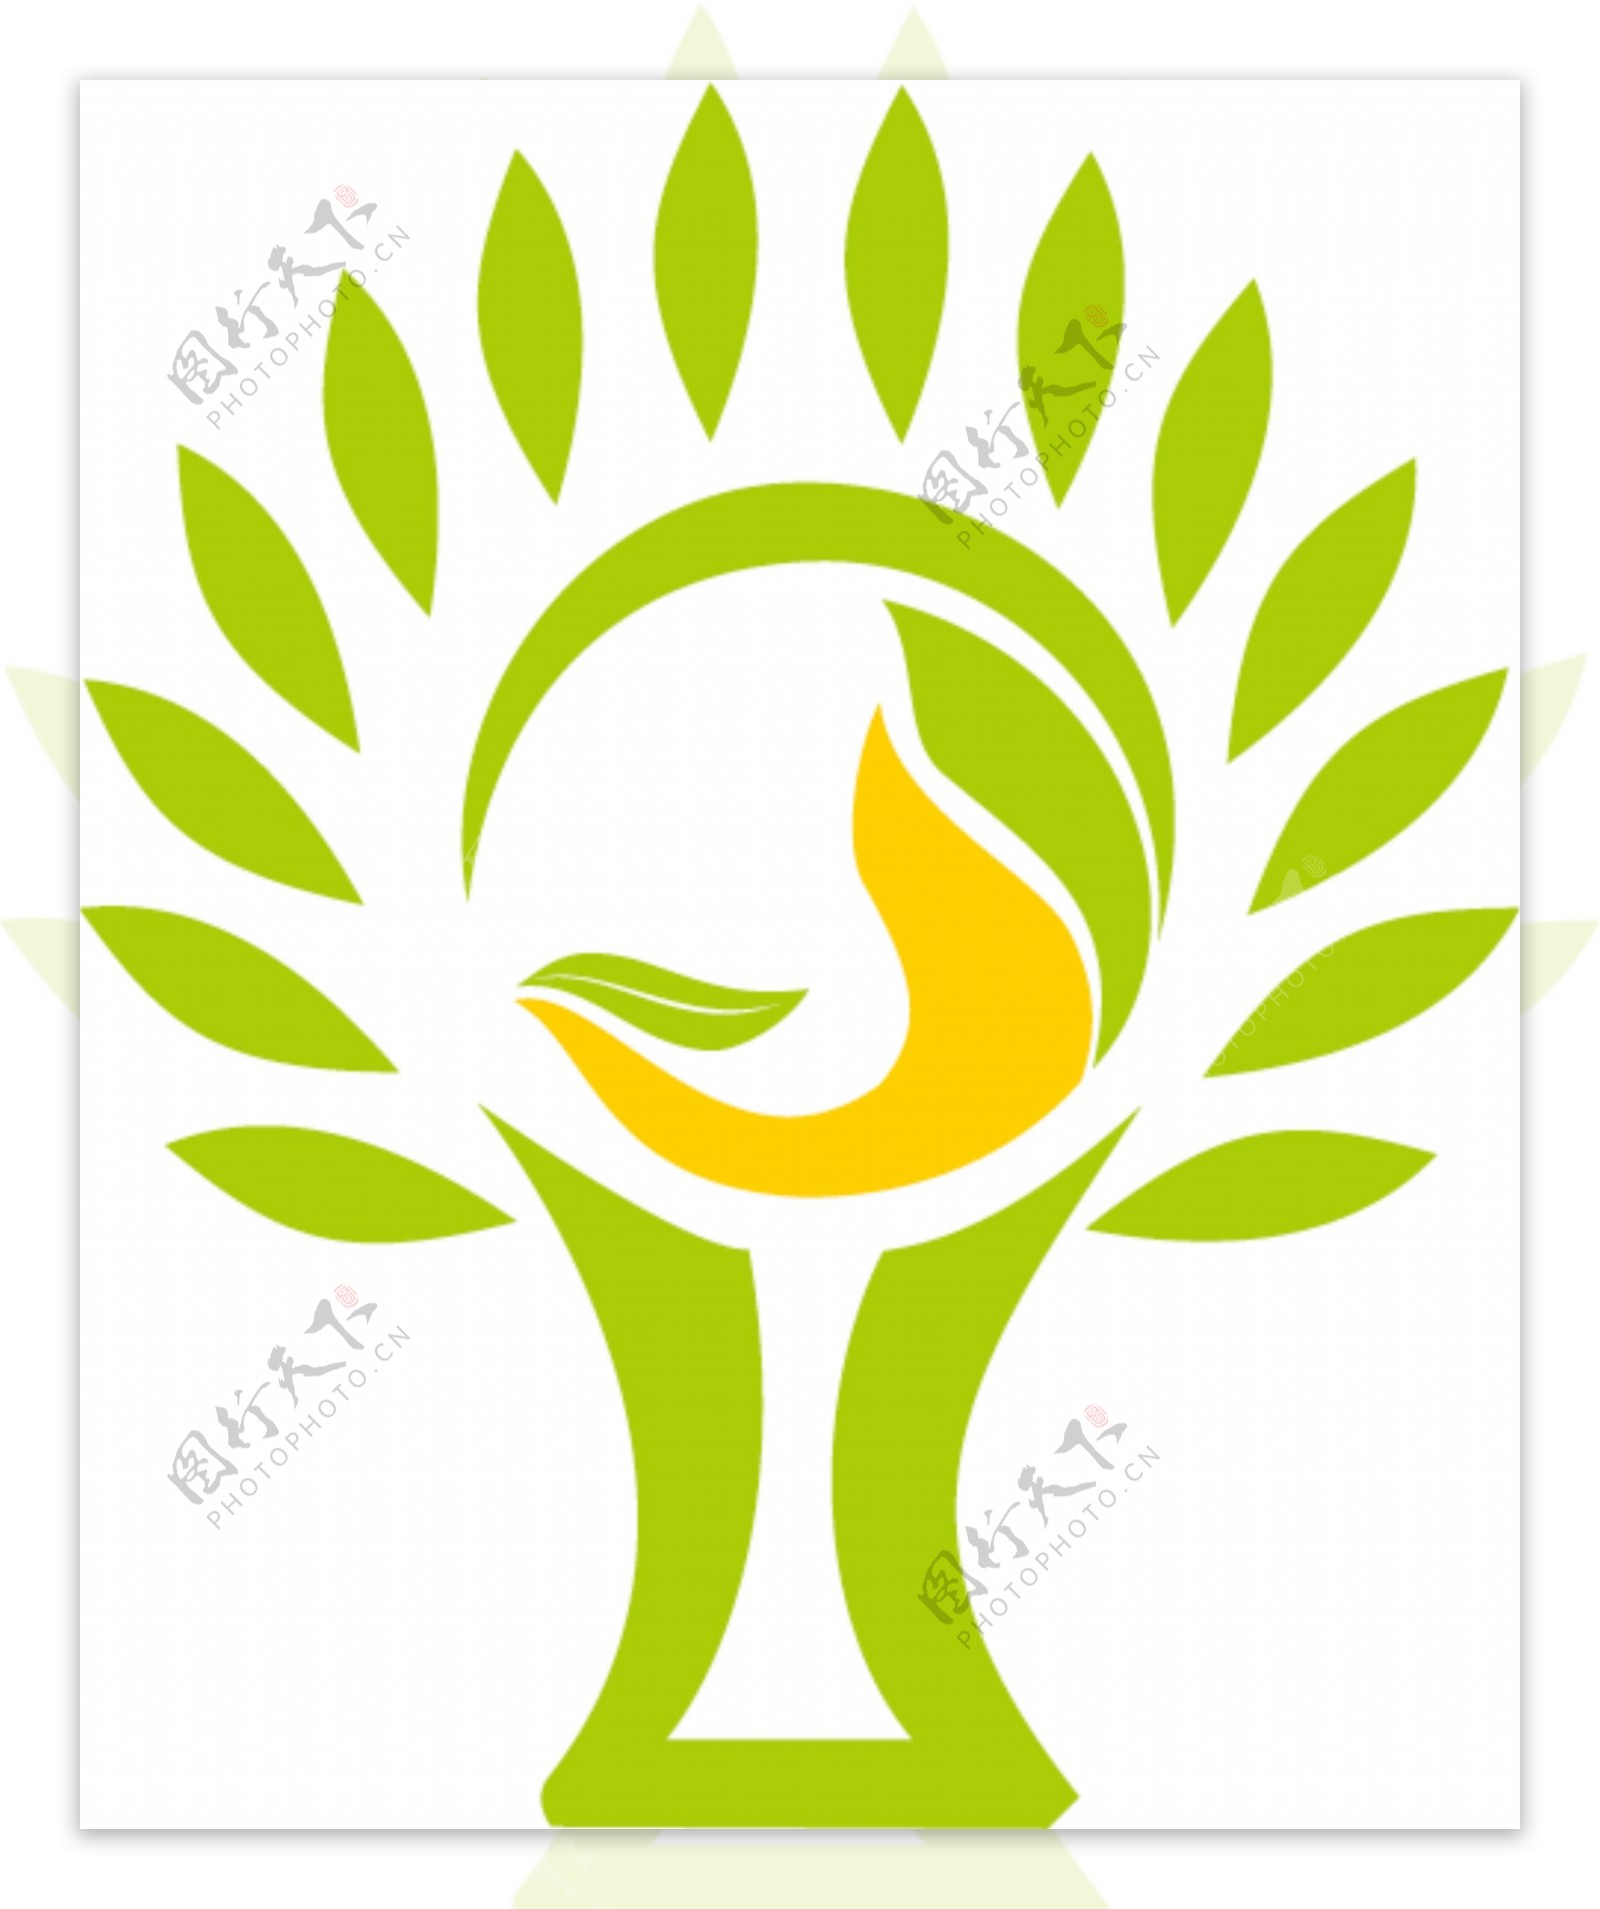 果园logo